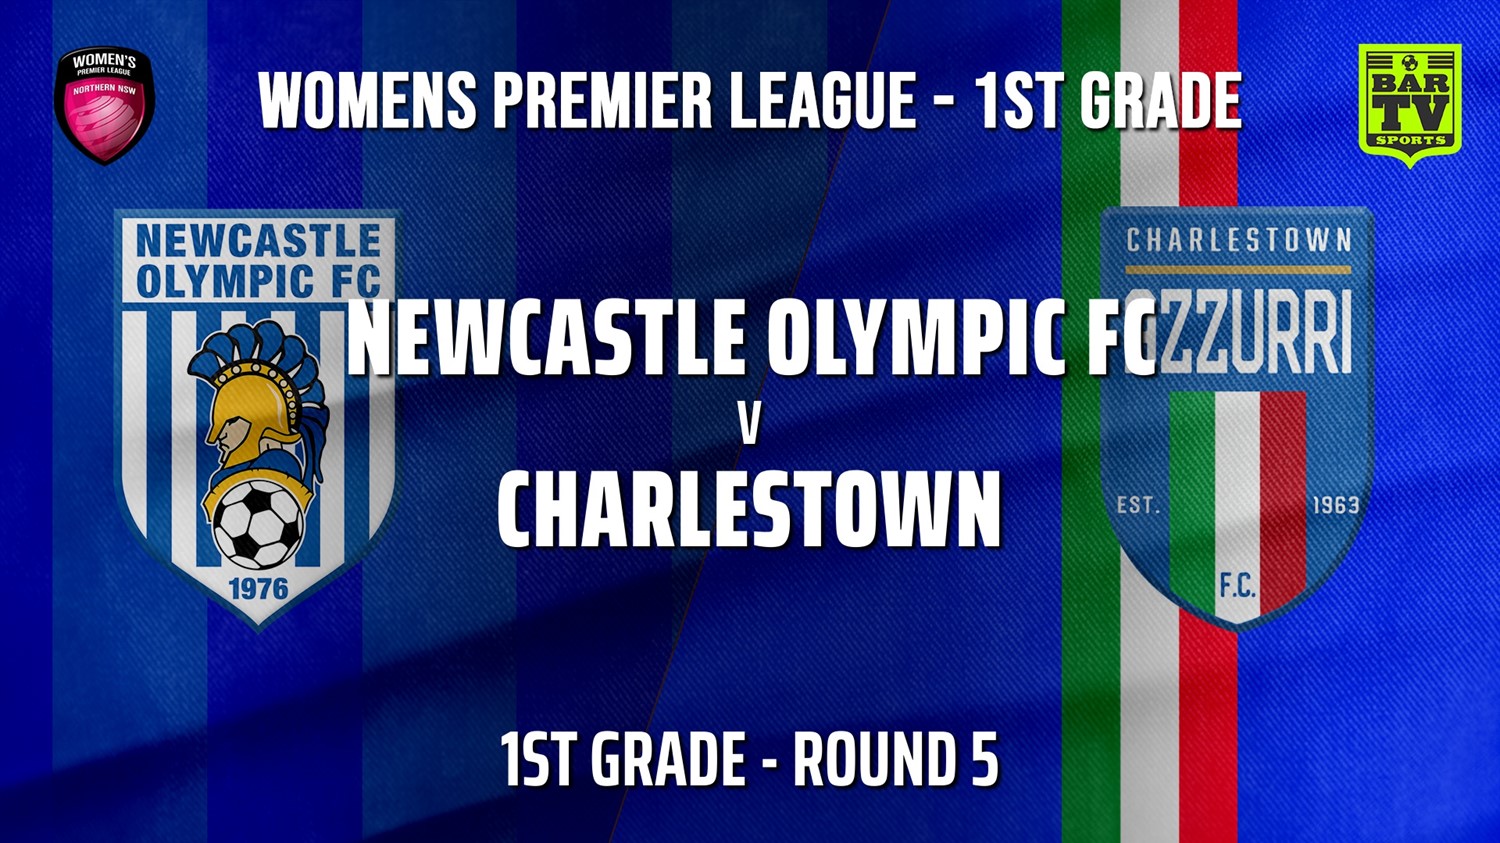 210508-Herald Women’s Premier League Round 5 - 1st Grade - Newcastle Olympic FC (women) v Charlestown Azzurri FC (women) Minigame Slate Image